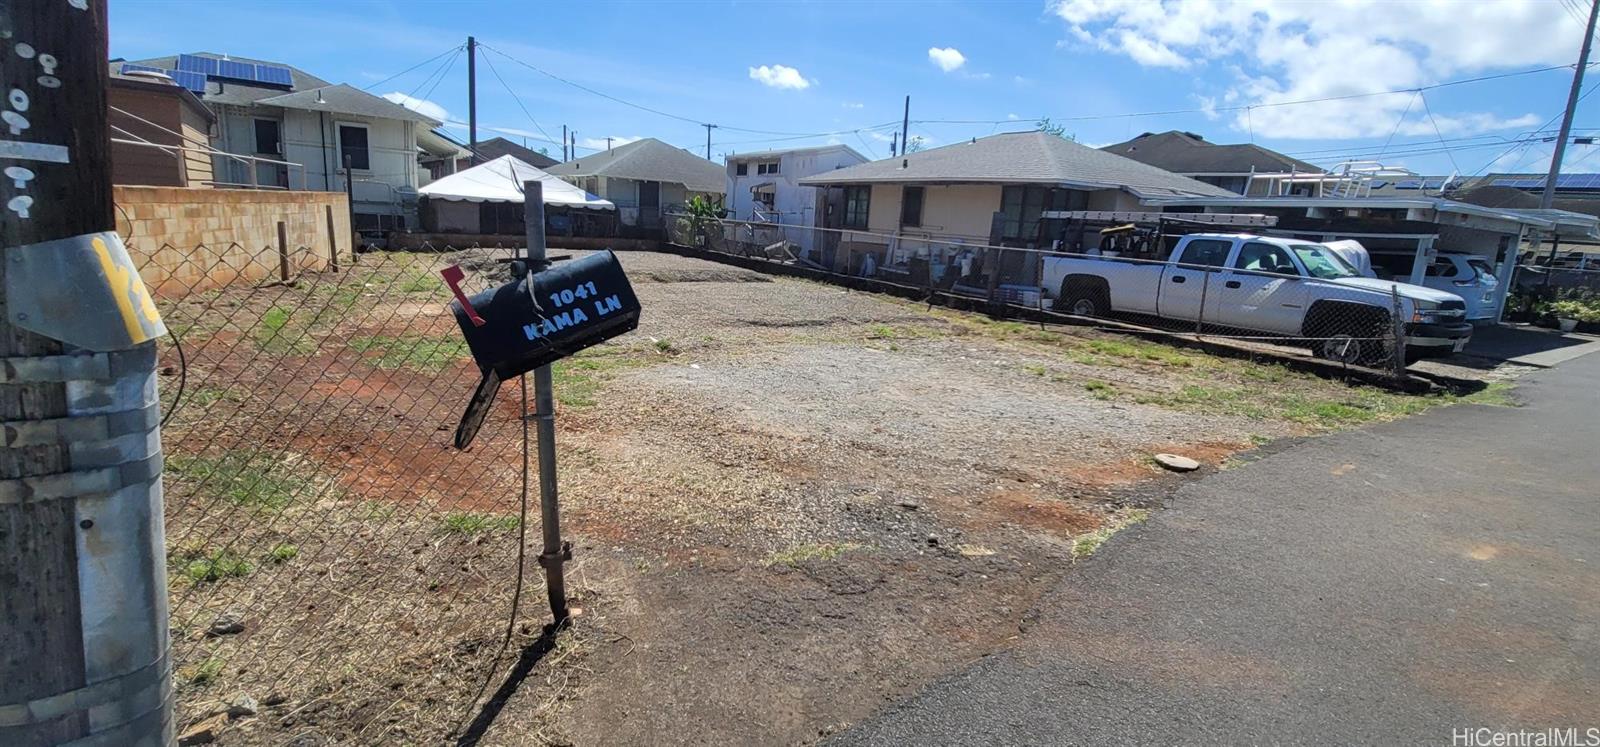 1041 Kama Lane  Honolulu, Hi vacant land for sale - photo 8 of 8